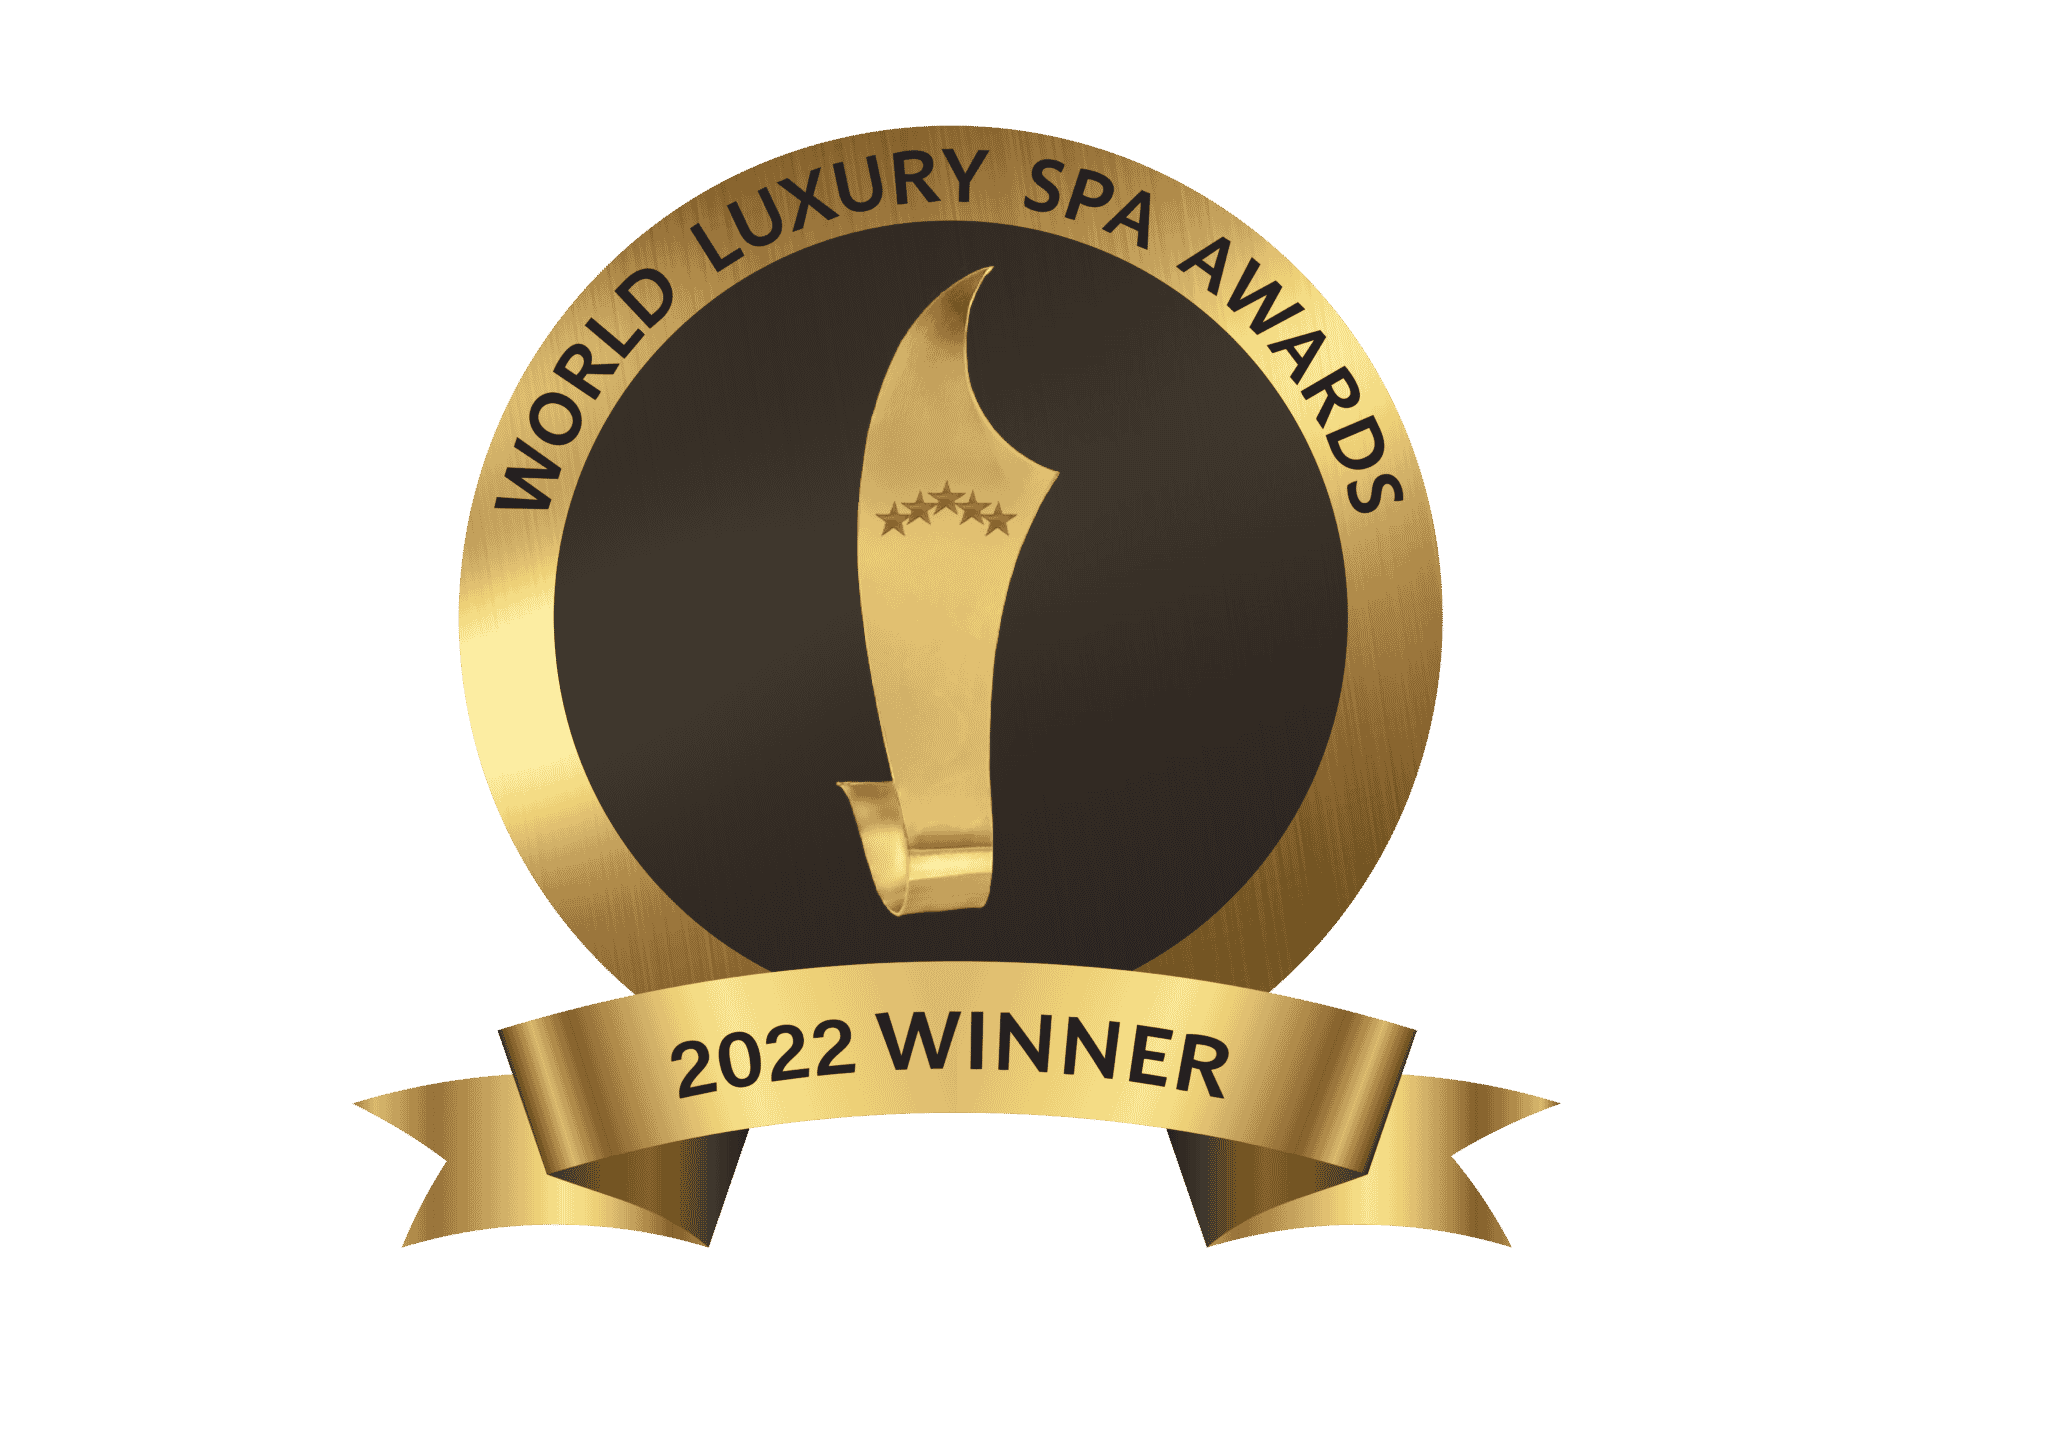 World Luxury Spa Award